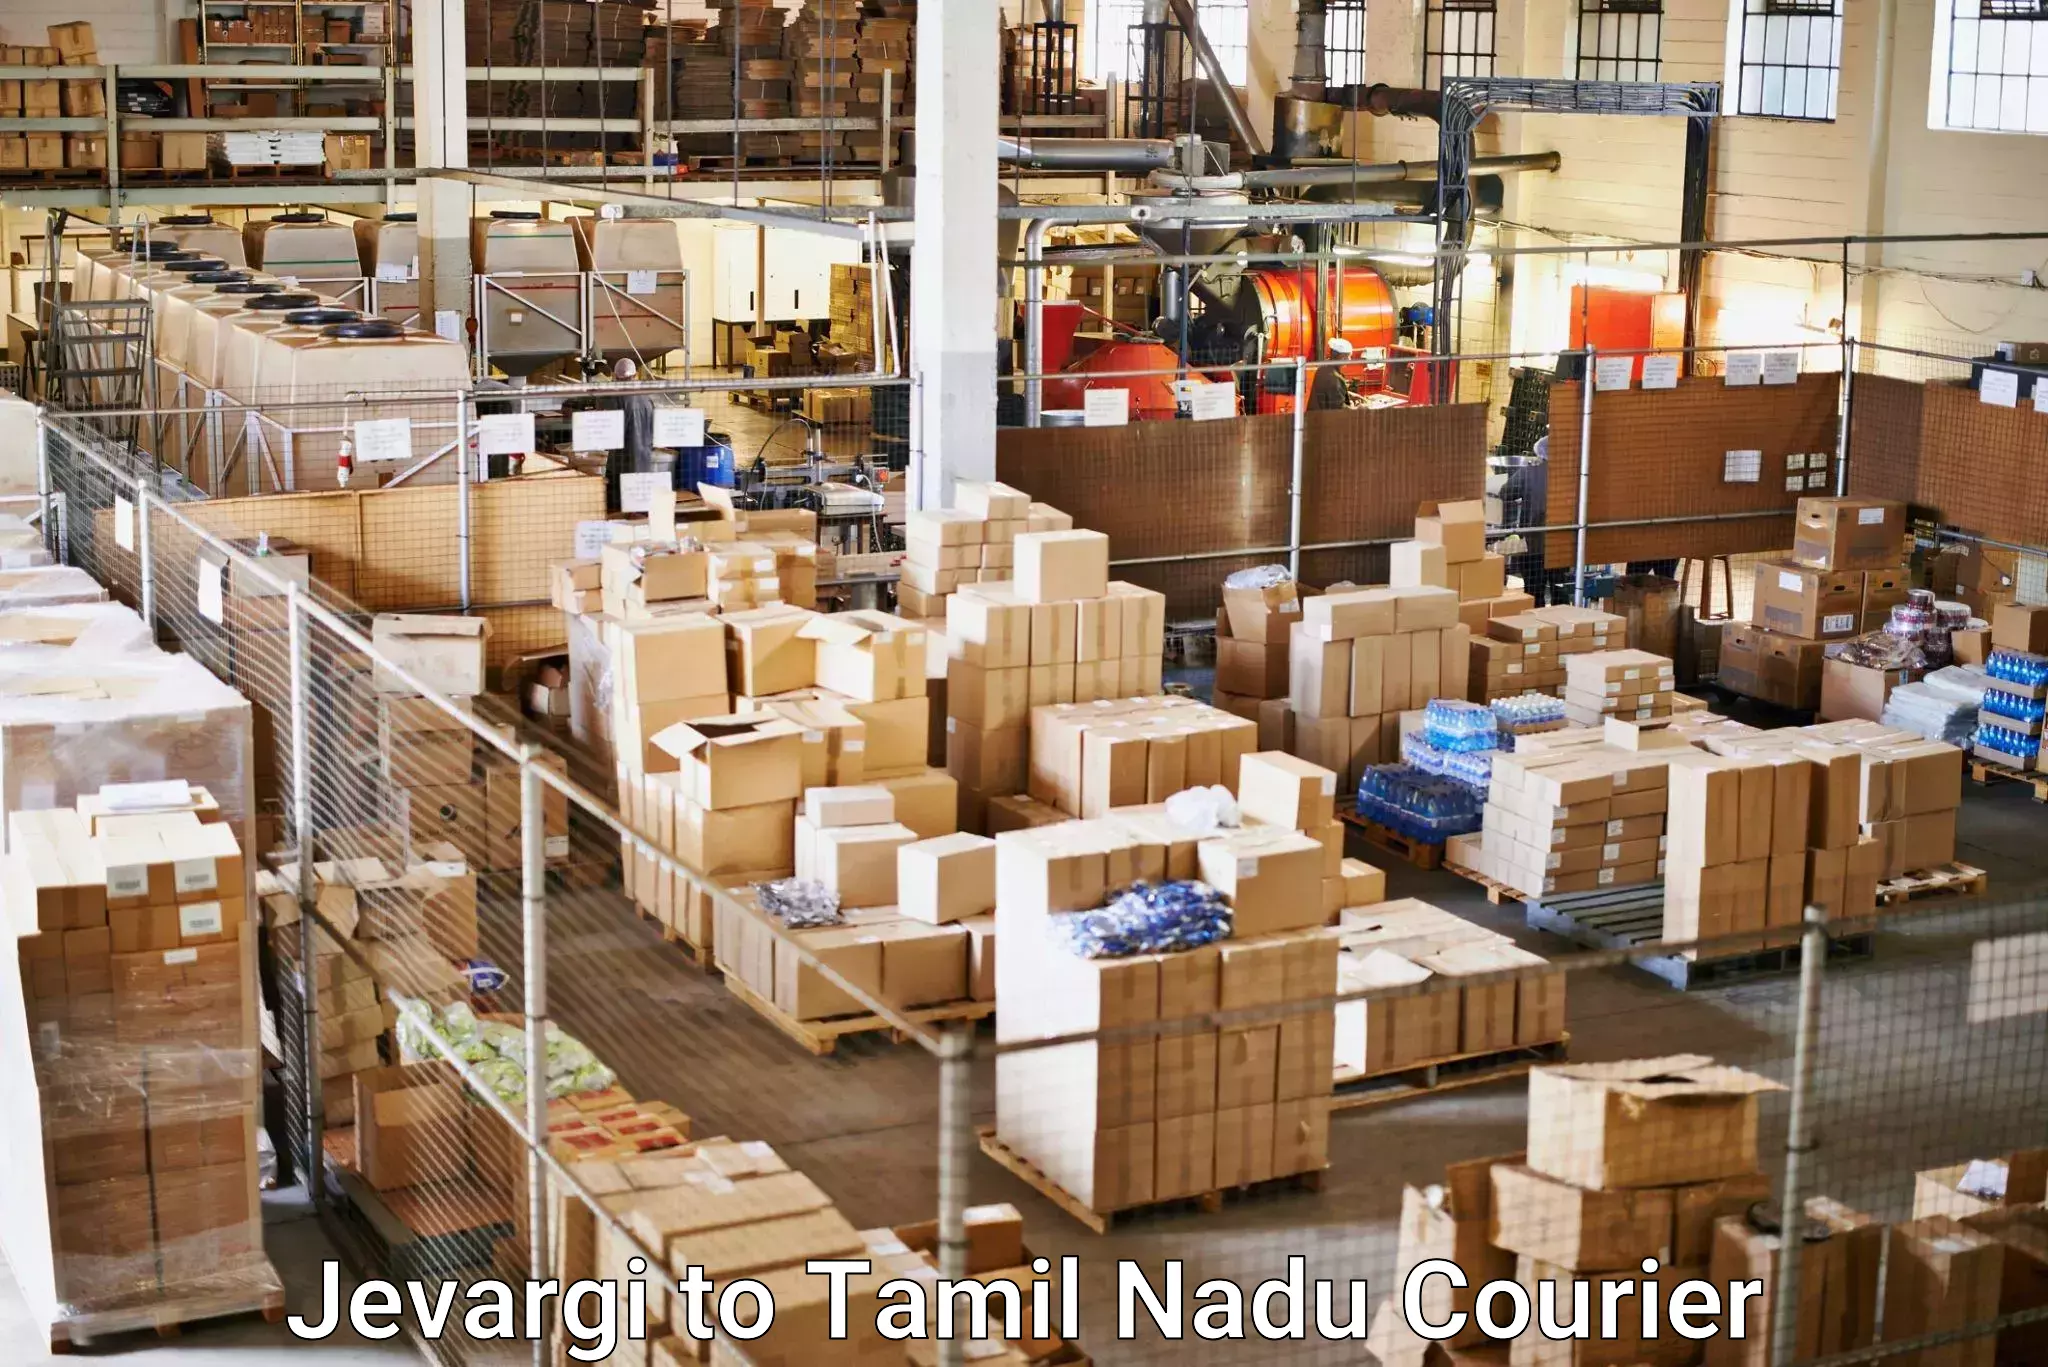 Reliable delivery network Jevargi to Cuddalore